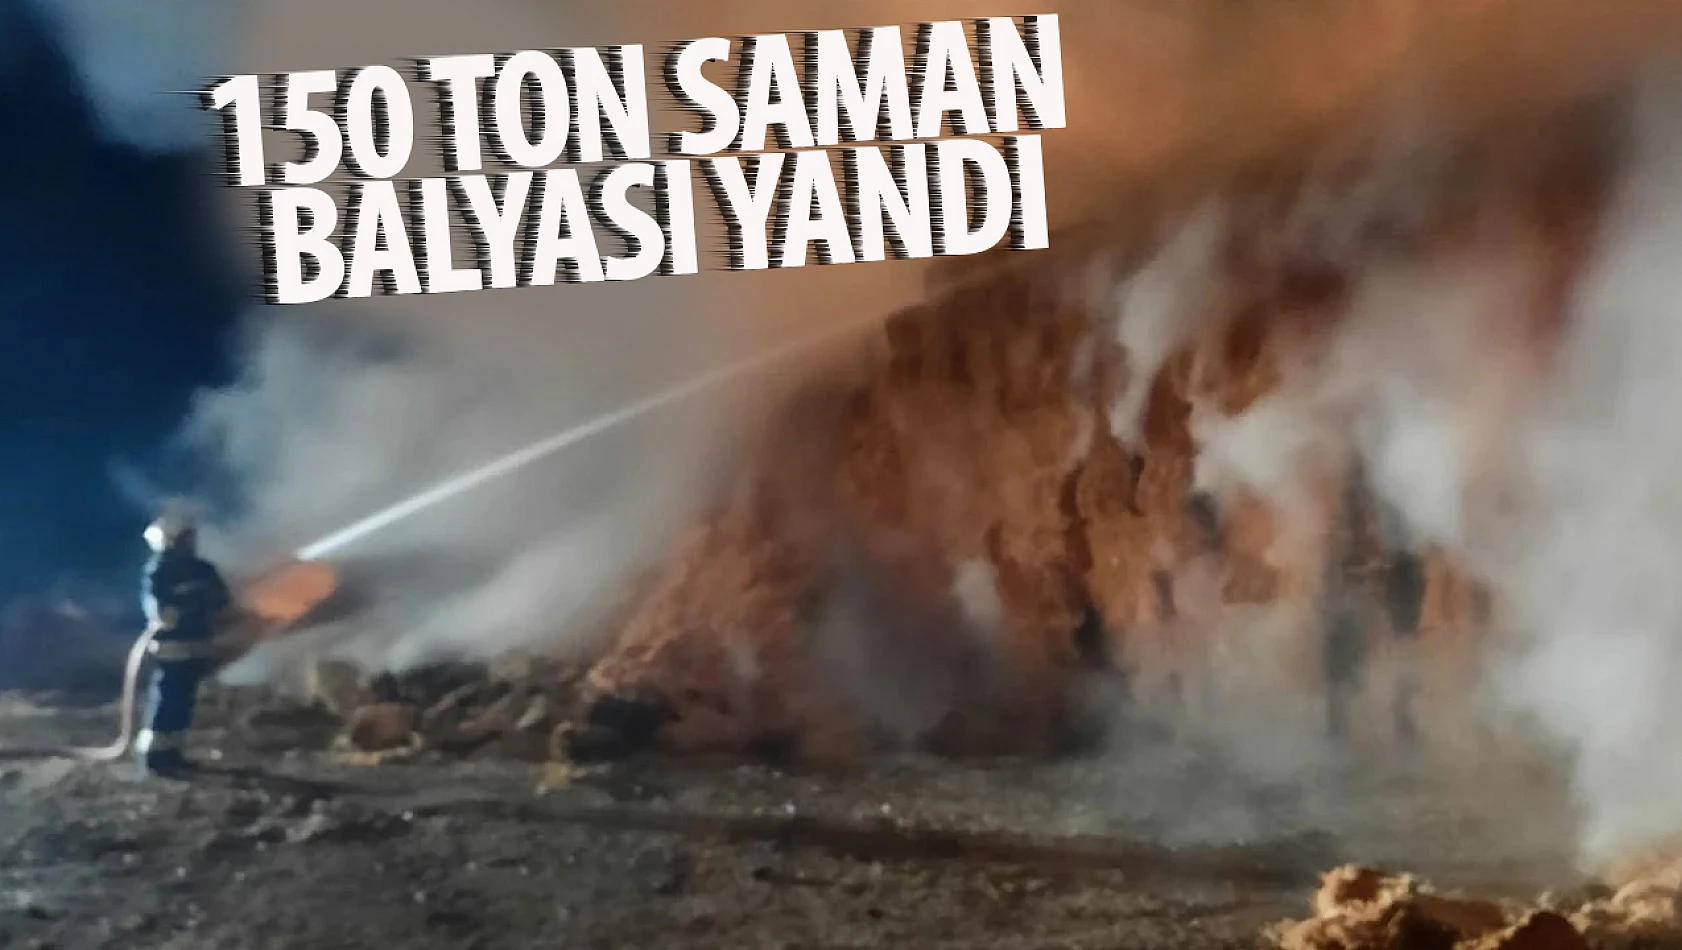 Konya'da 150 ton saman balyası yandı!